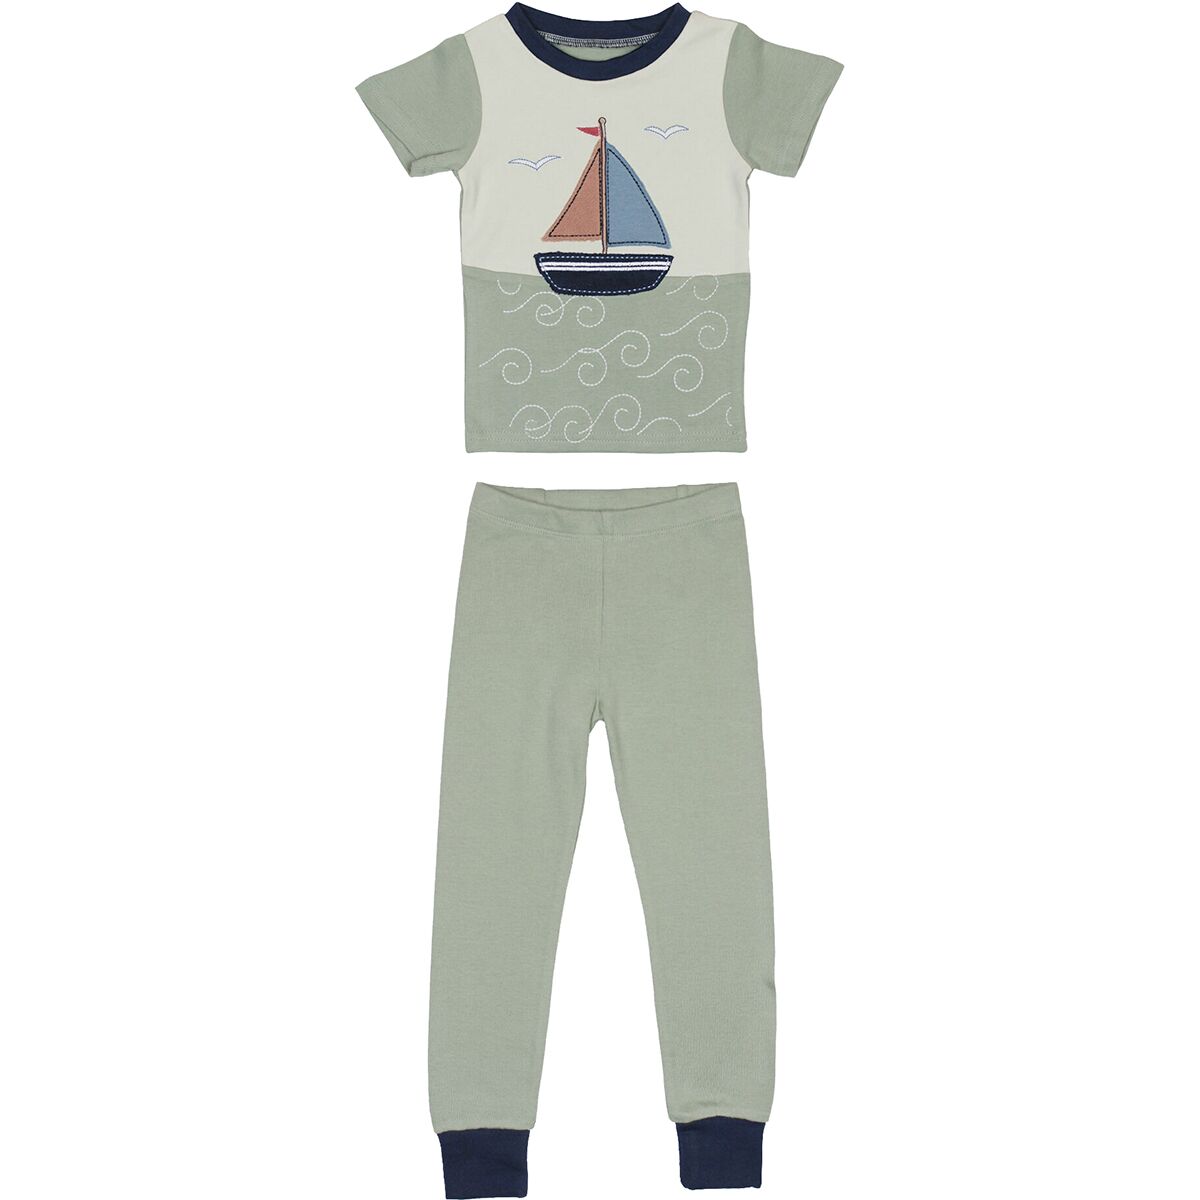 L'oved Baby Applique Short Sleeve PJ Set - Toddlers Boys'